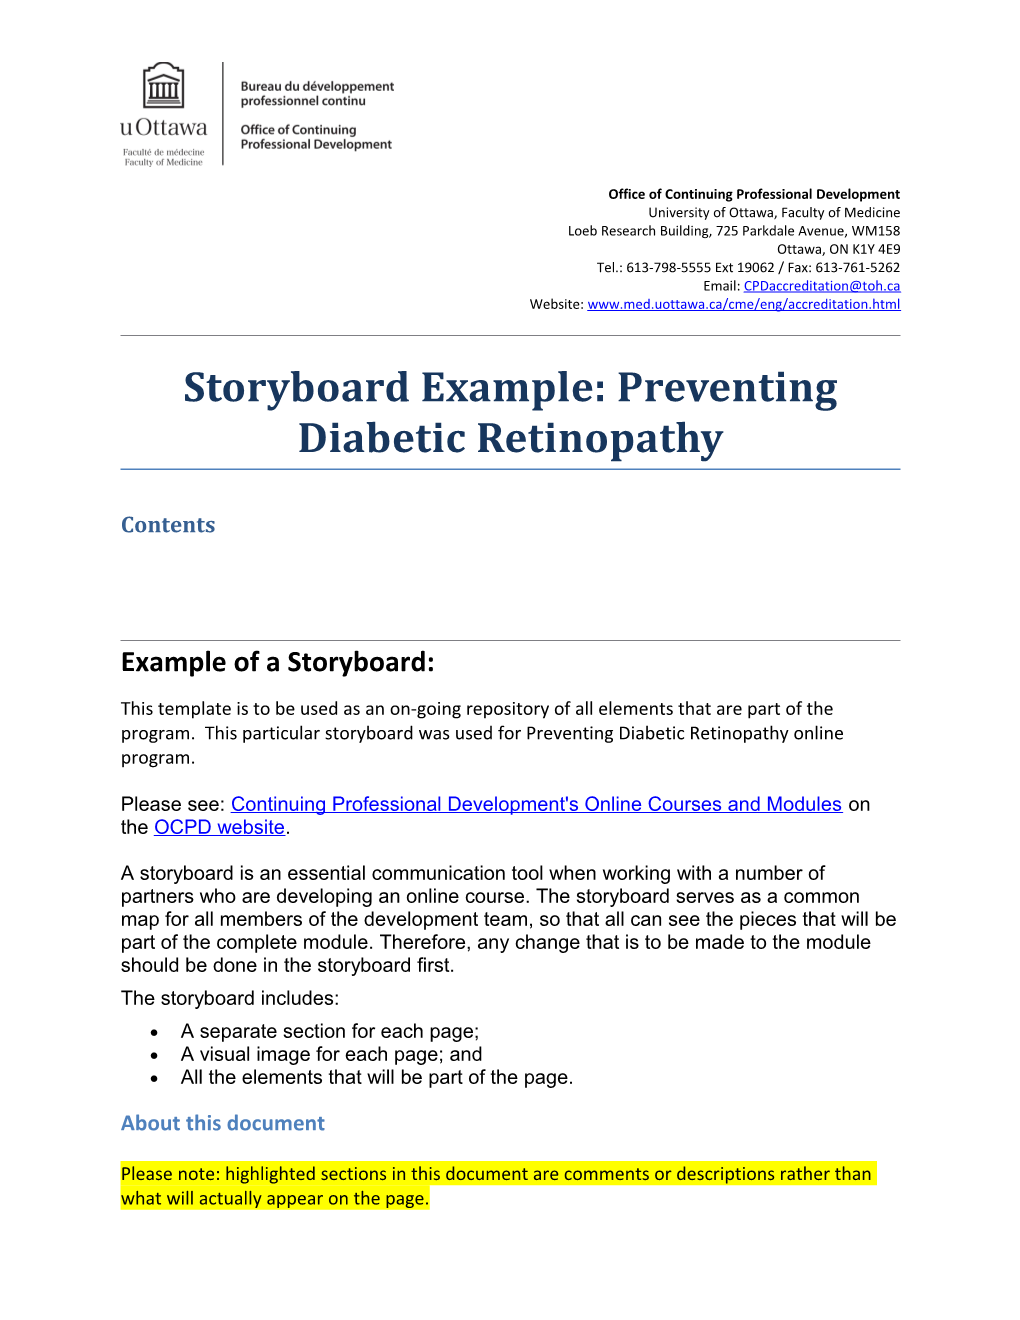 Storyboard Example: Preventing Diabetic Retinopathy